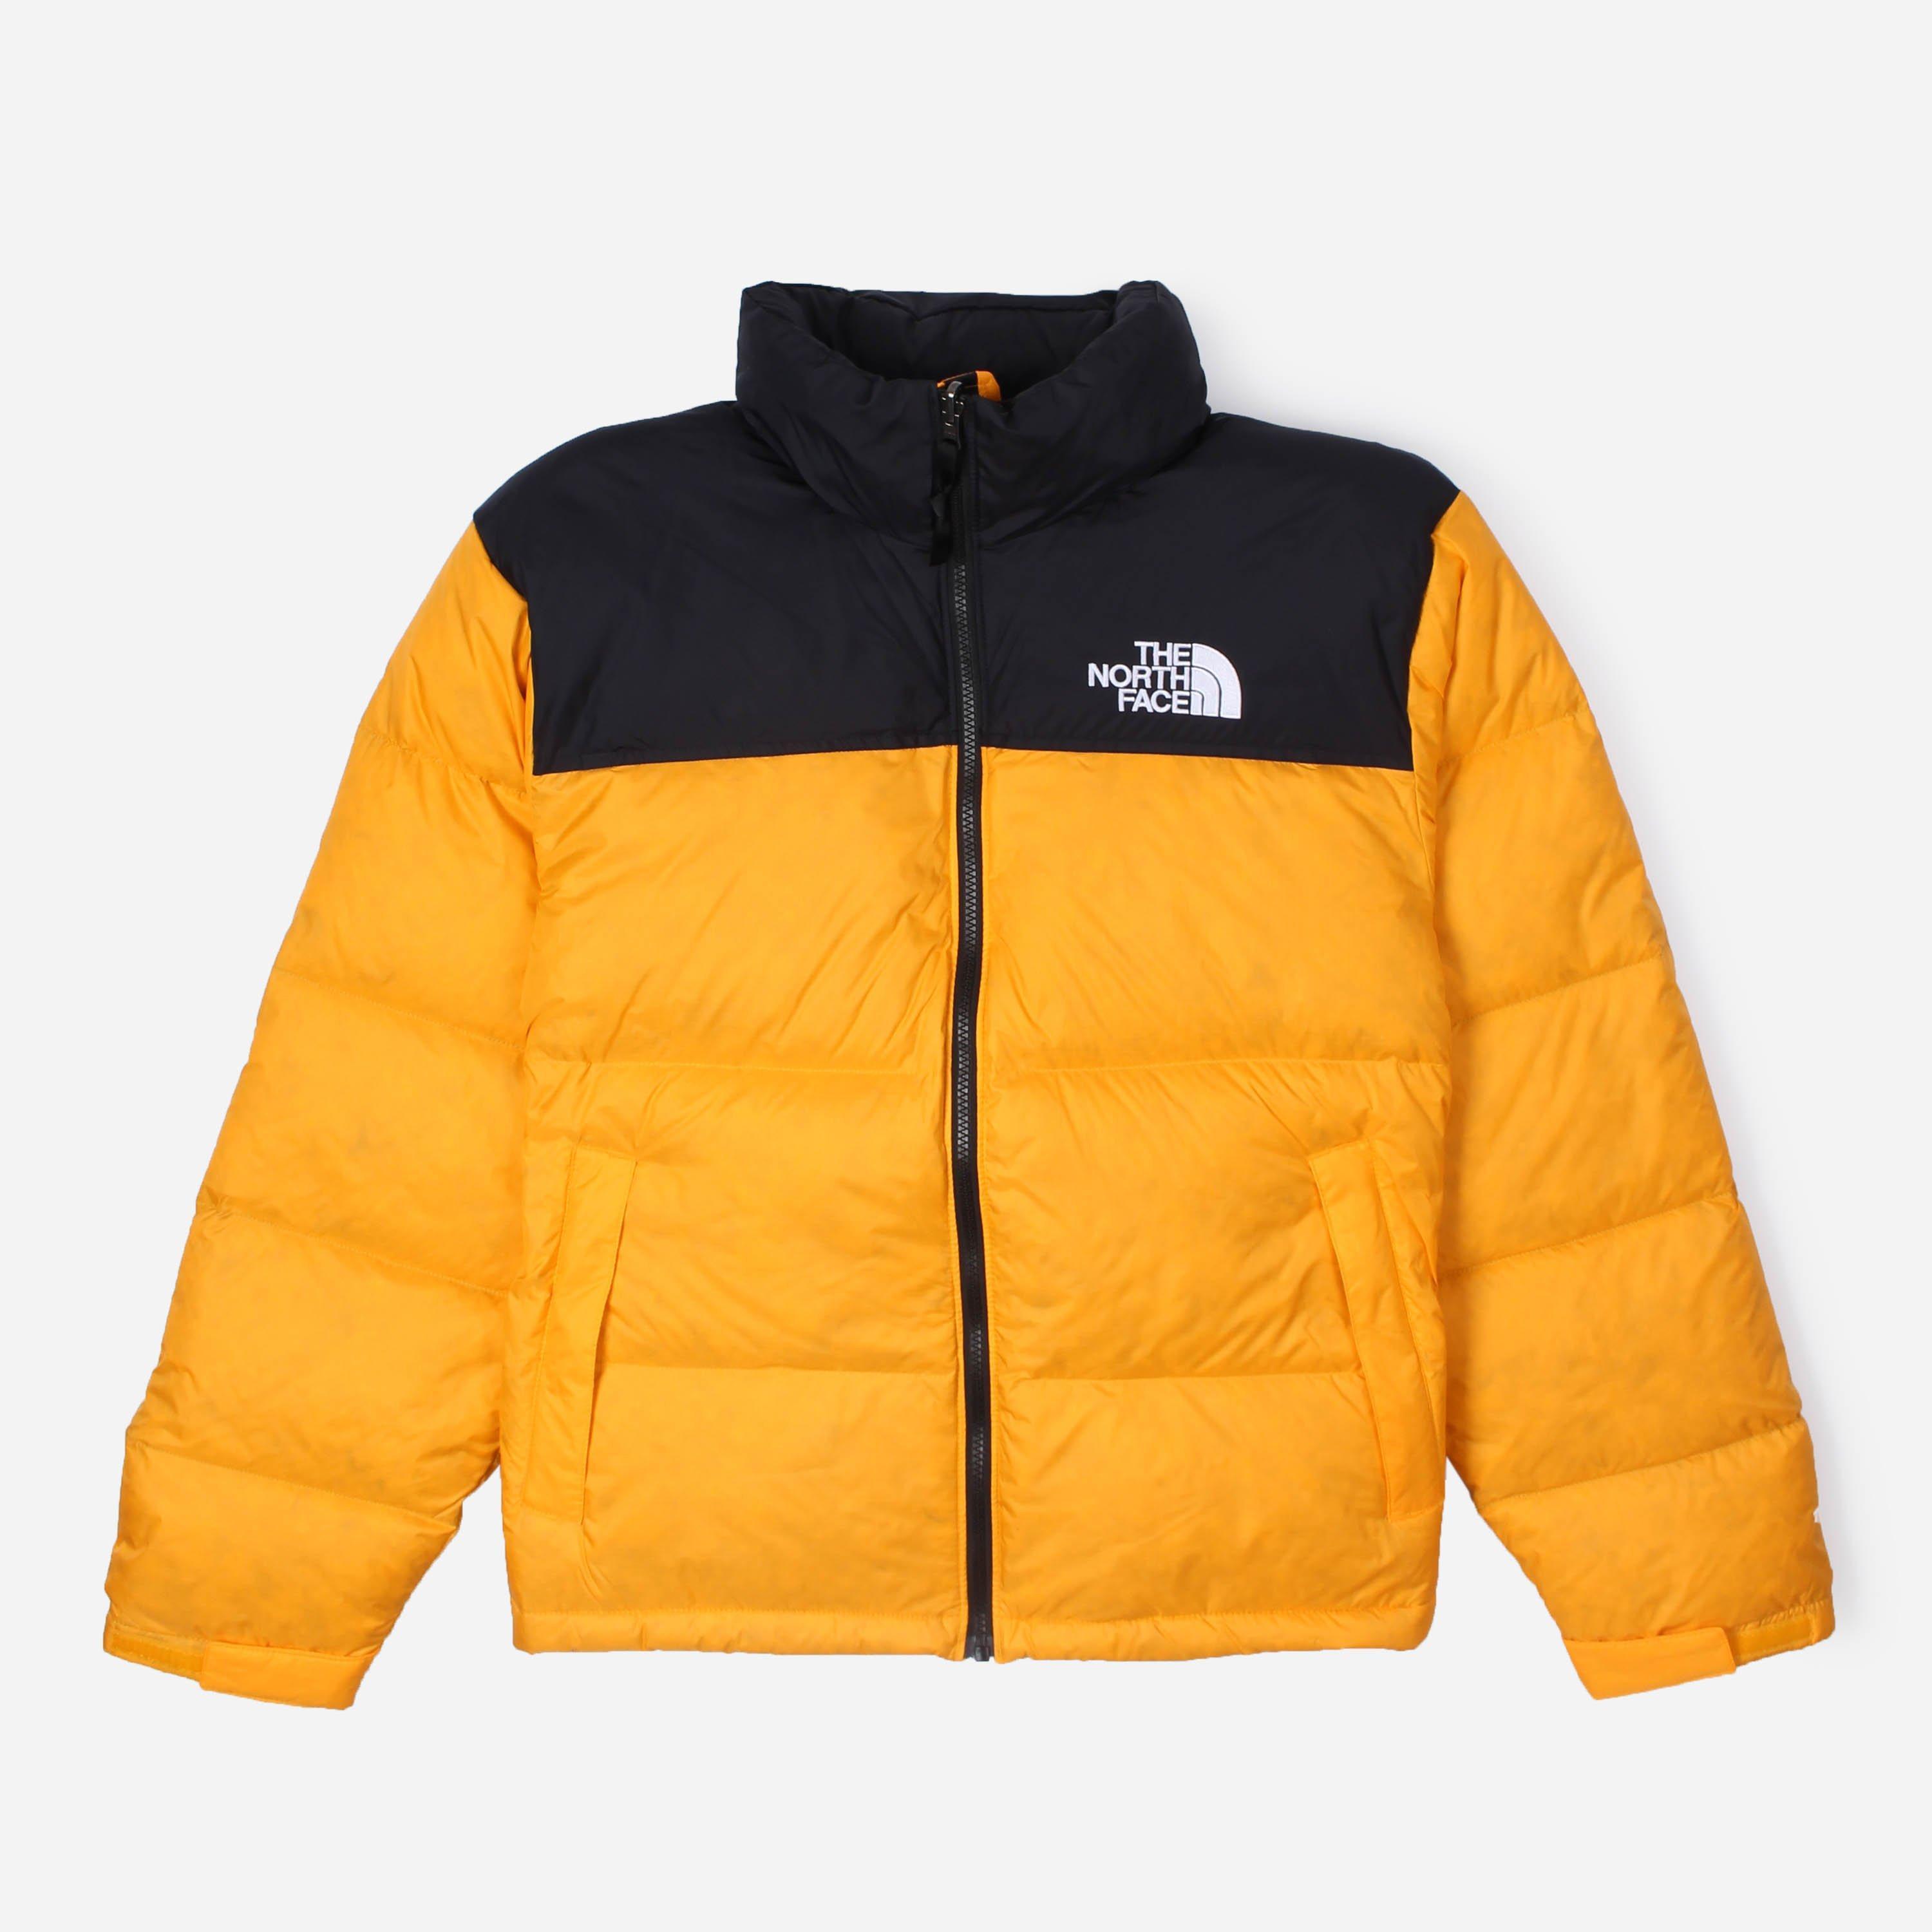 The North Face 1996 Retro Nuptse Jacket Orange for Men - Lyst